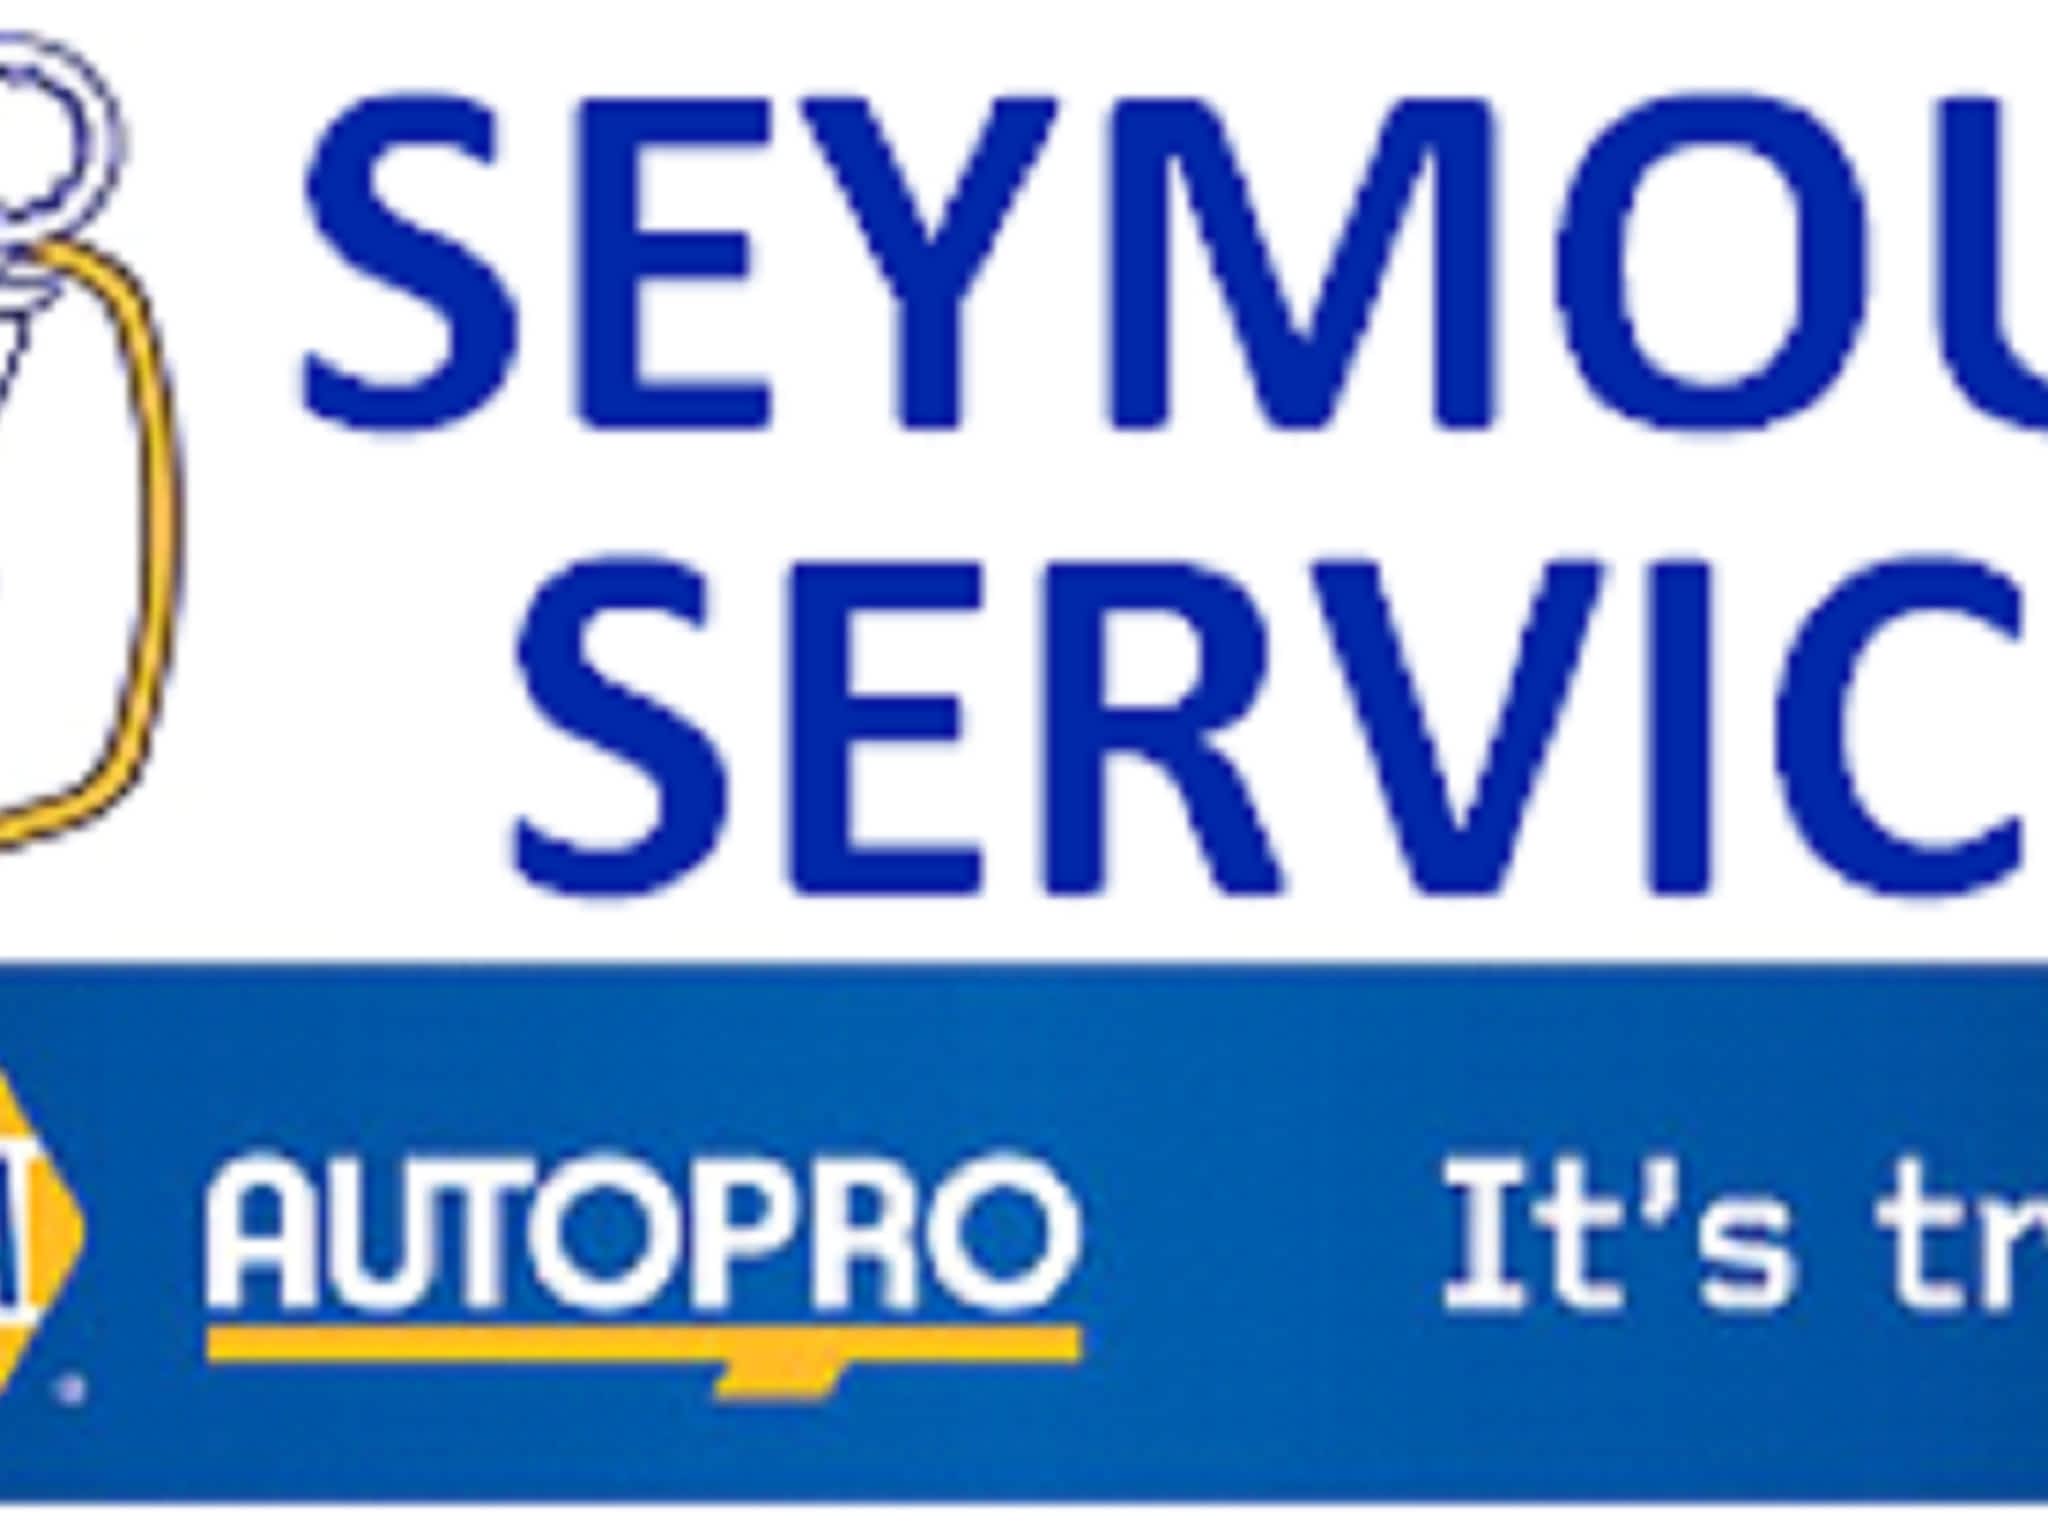 photo Napa Autopro - Seymour Services